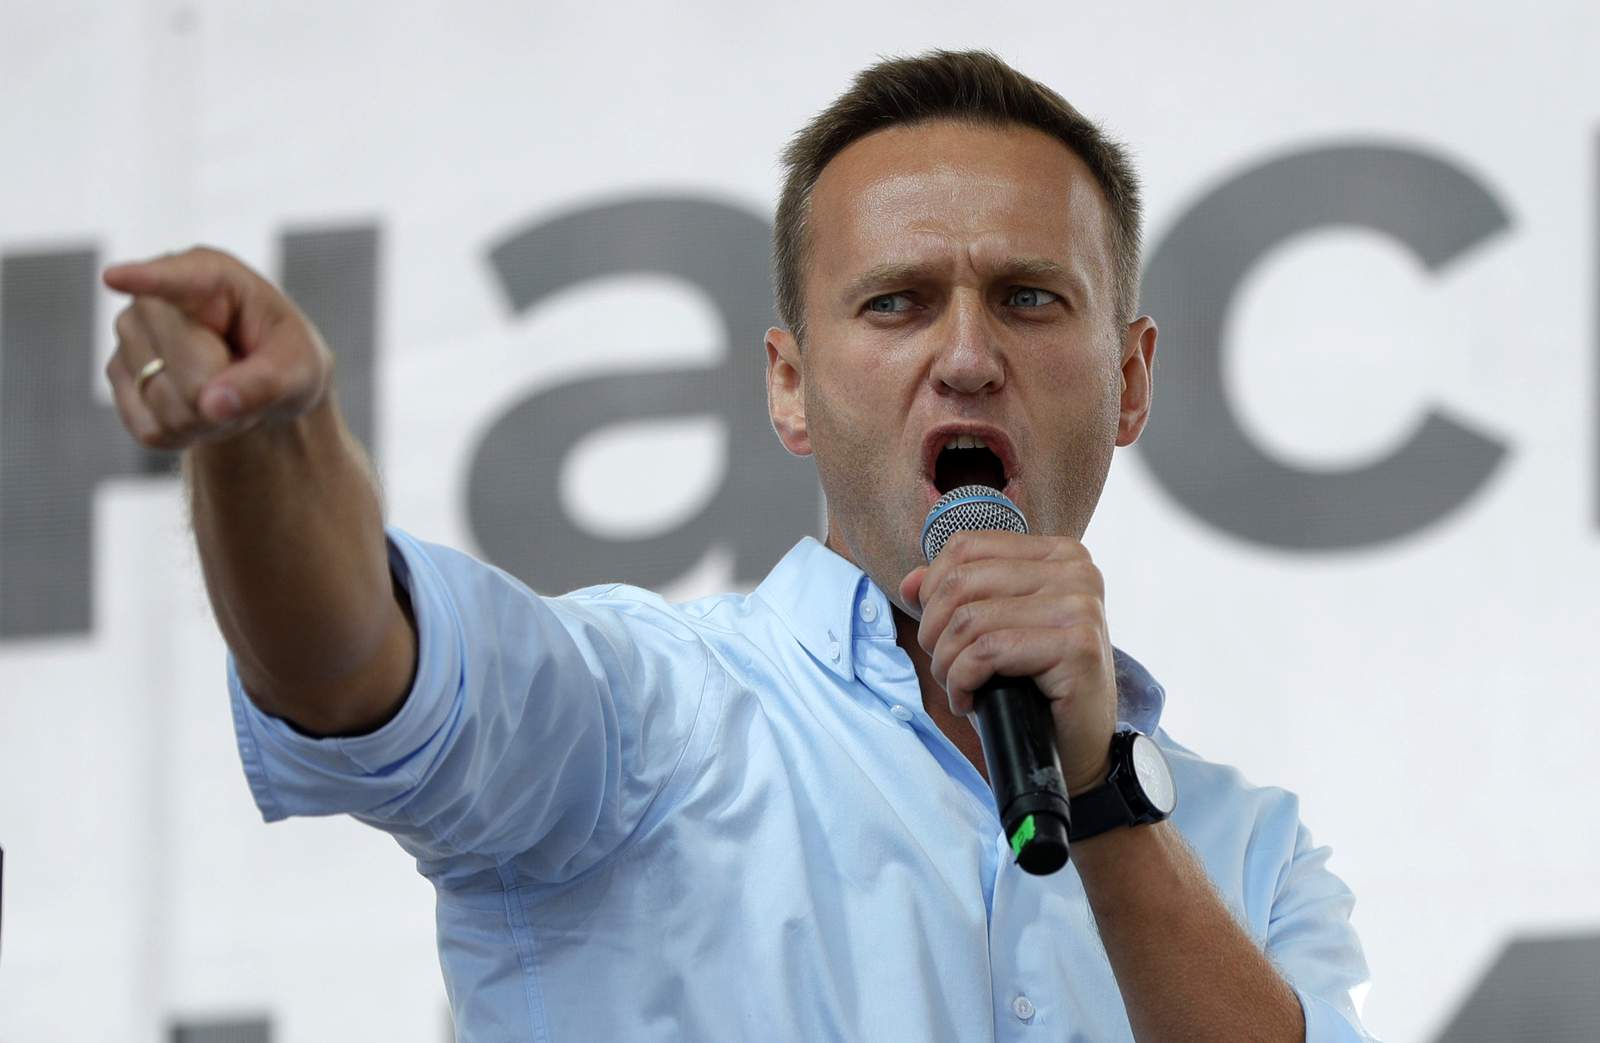 German govt: Labs confirm Navalny was poisoned with Novichok